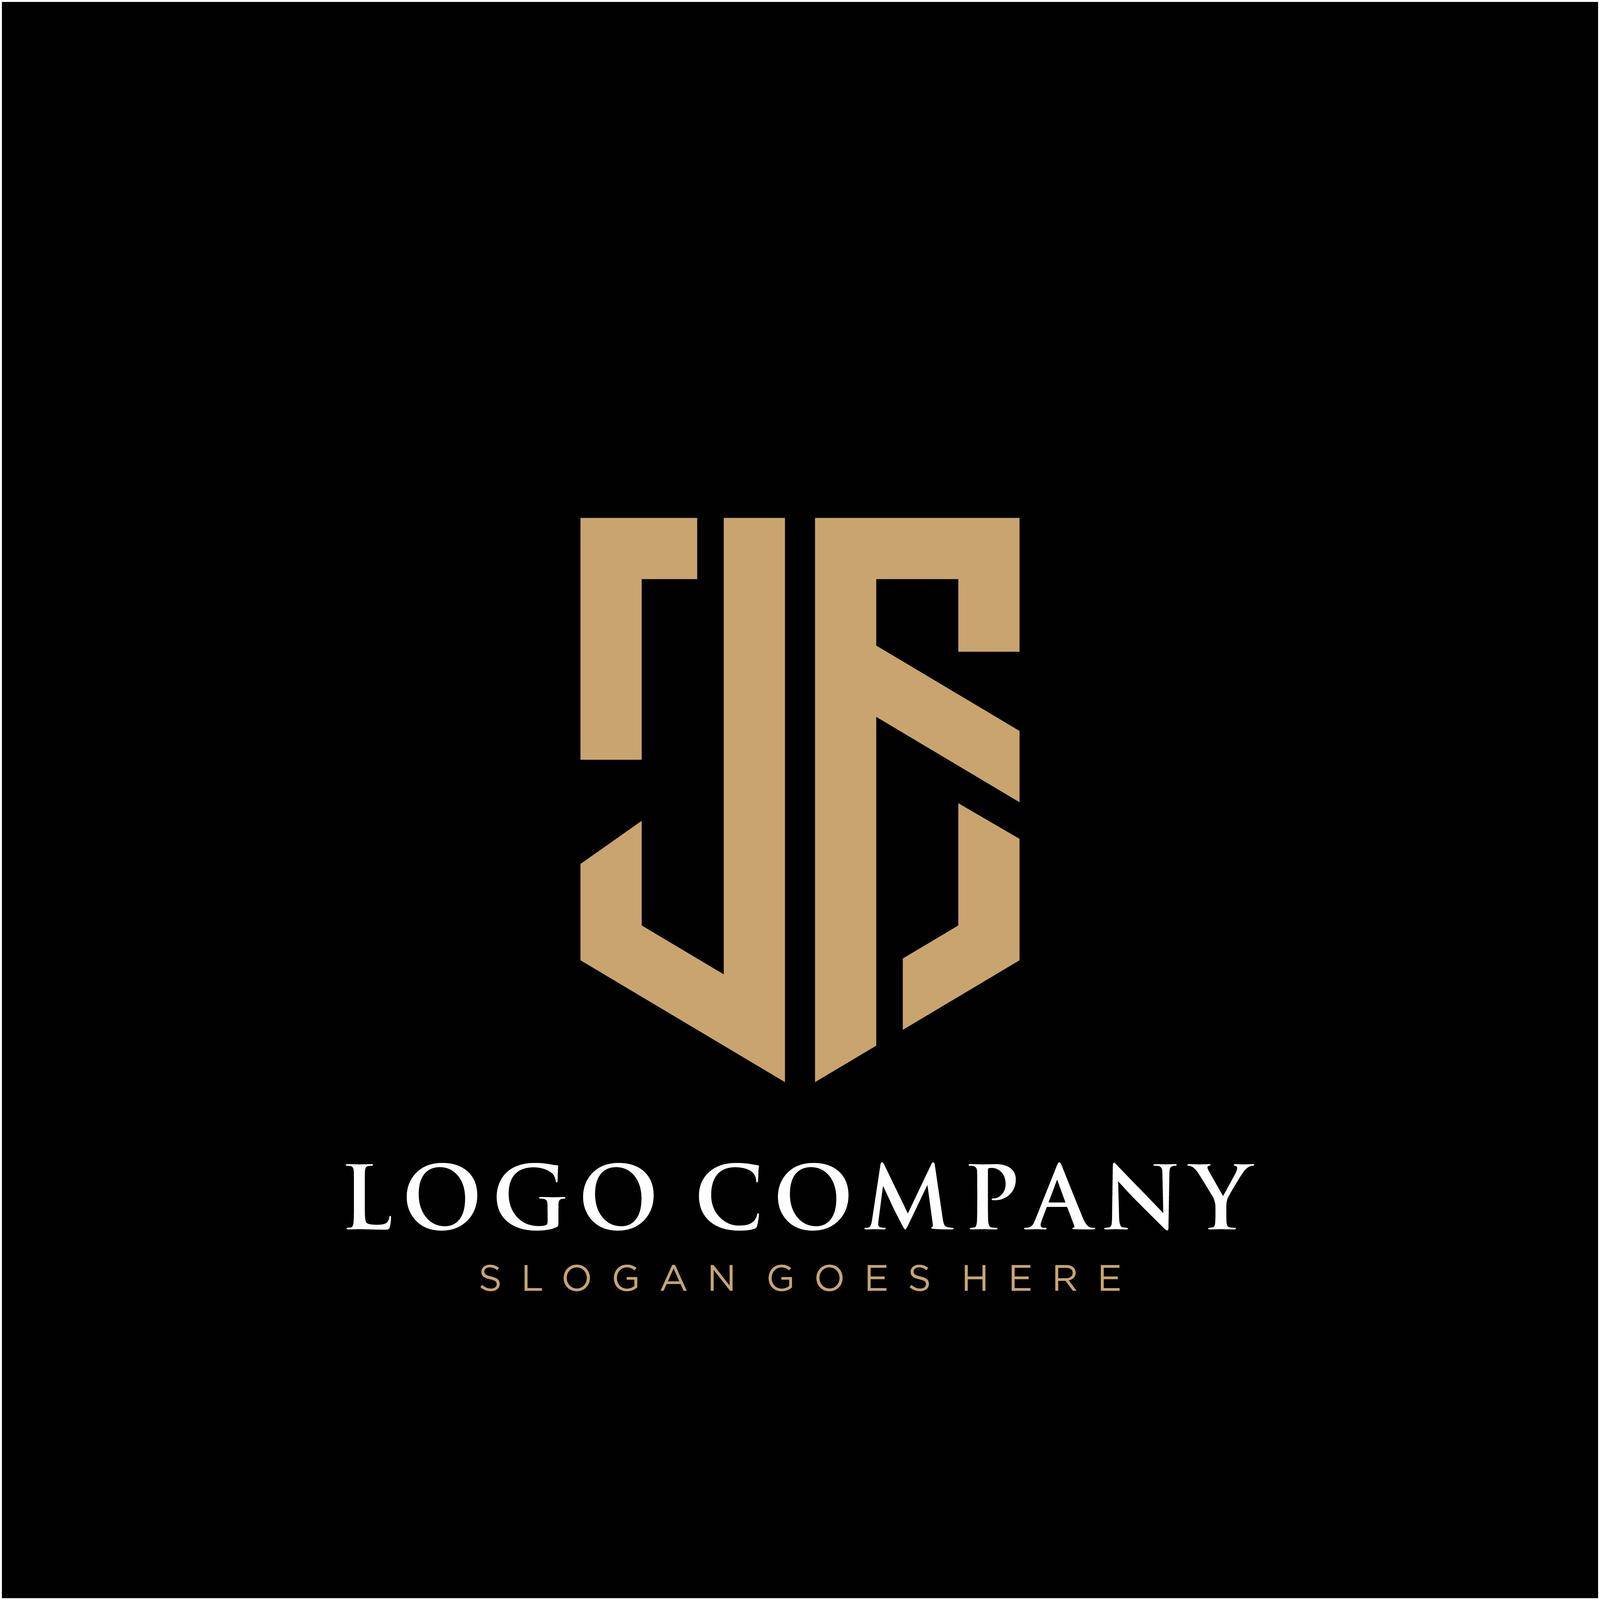 JF Letter logo icon design template elements by liaanniesatul